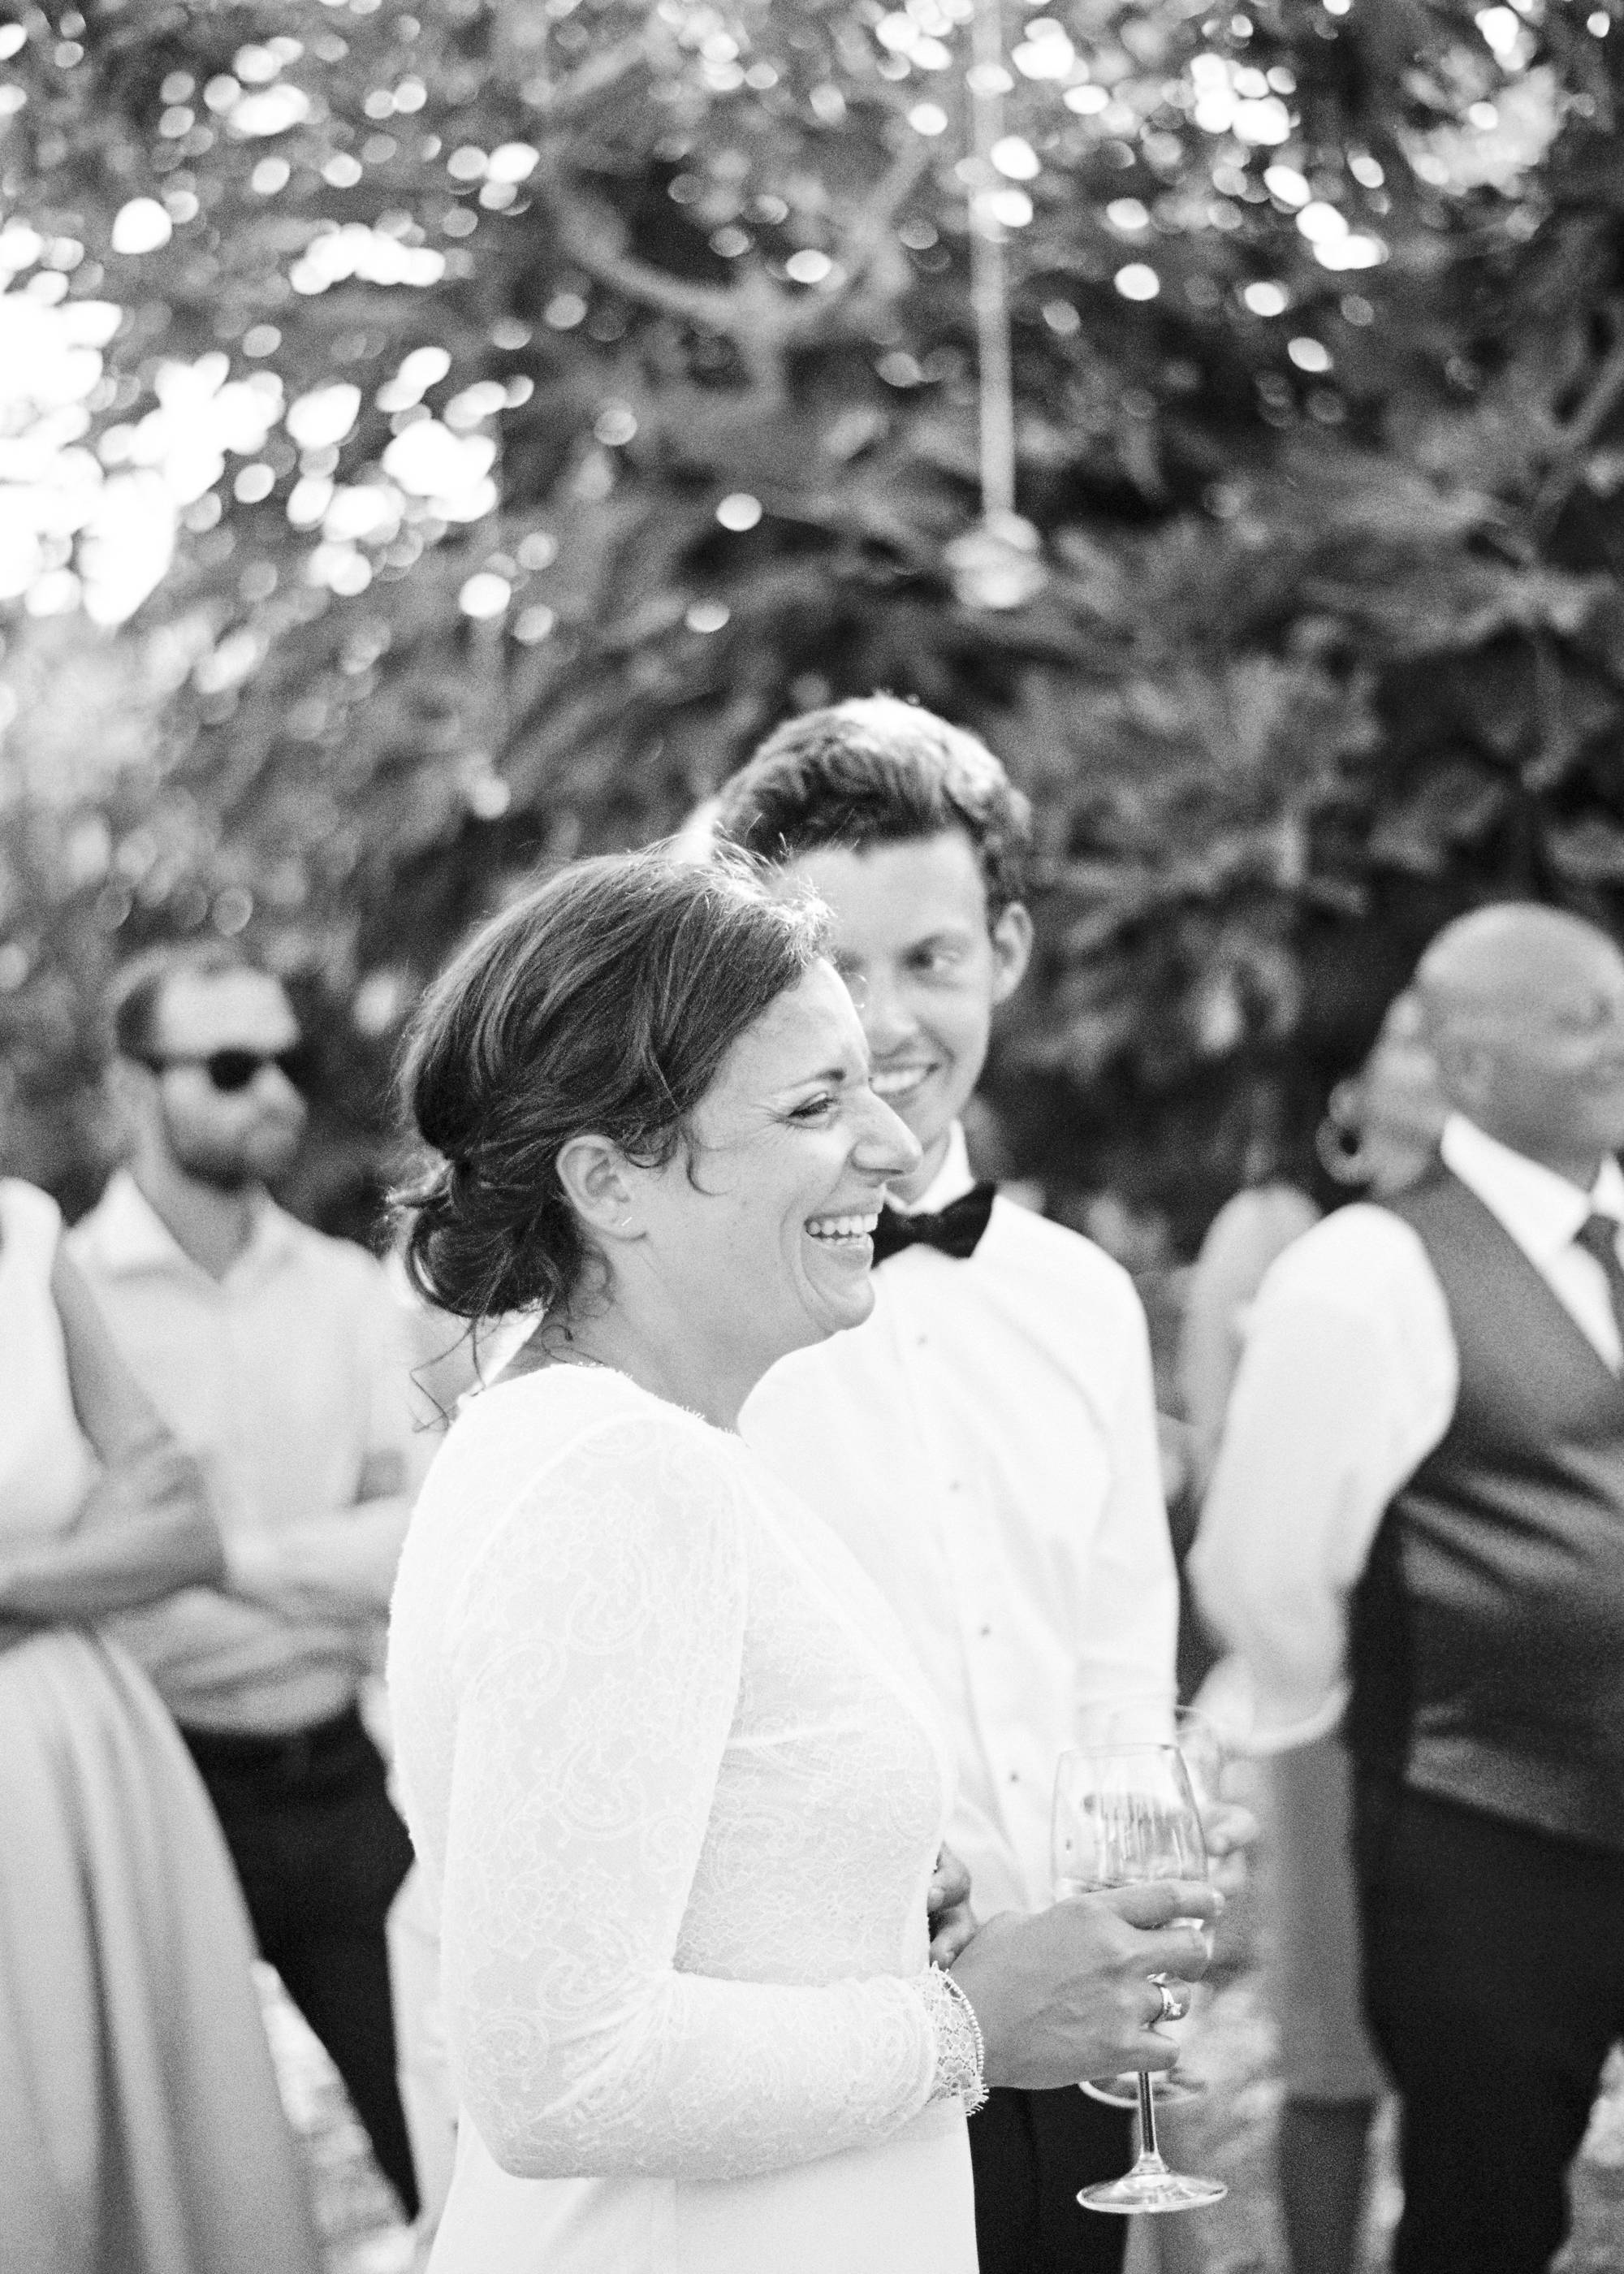 Fine art wedding photographer Destination Wedding Tuscany Italy - Bride laughing